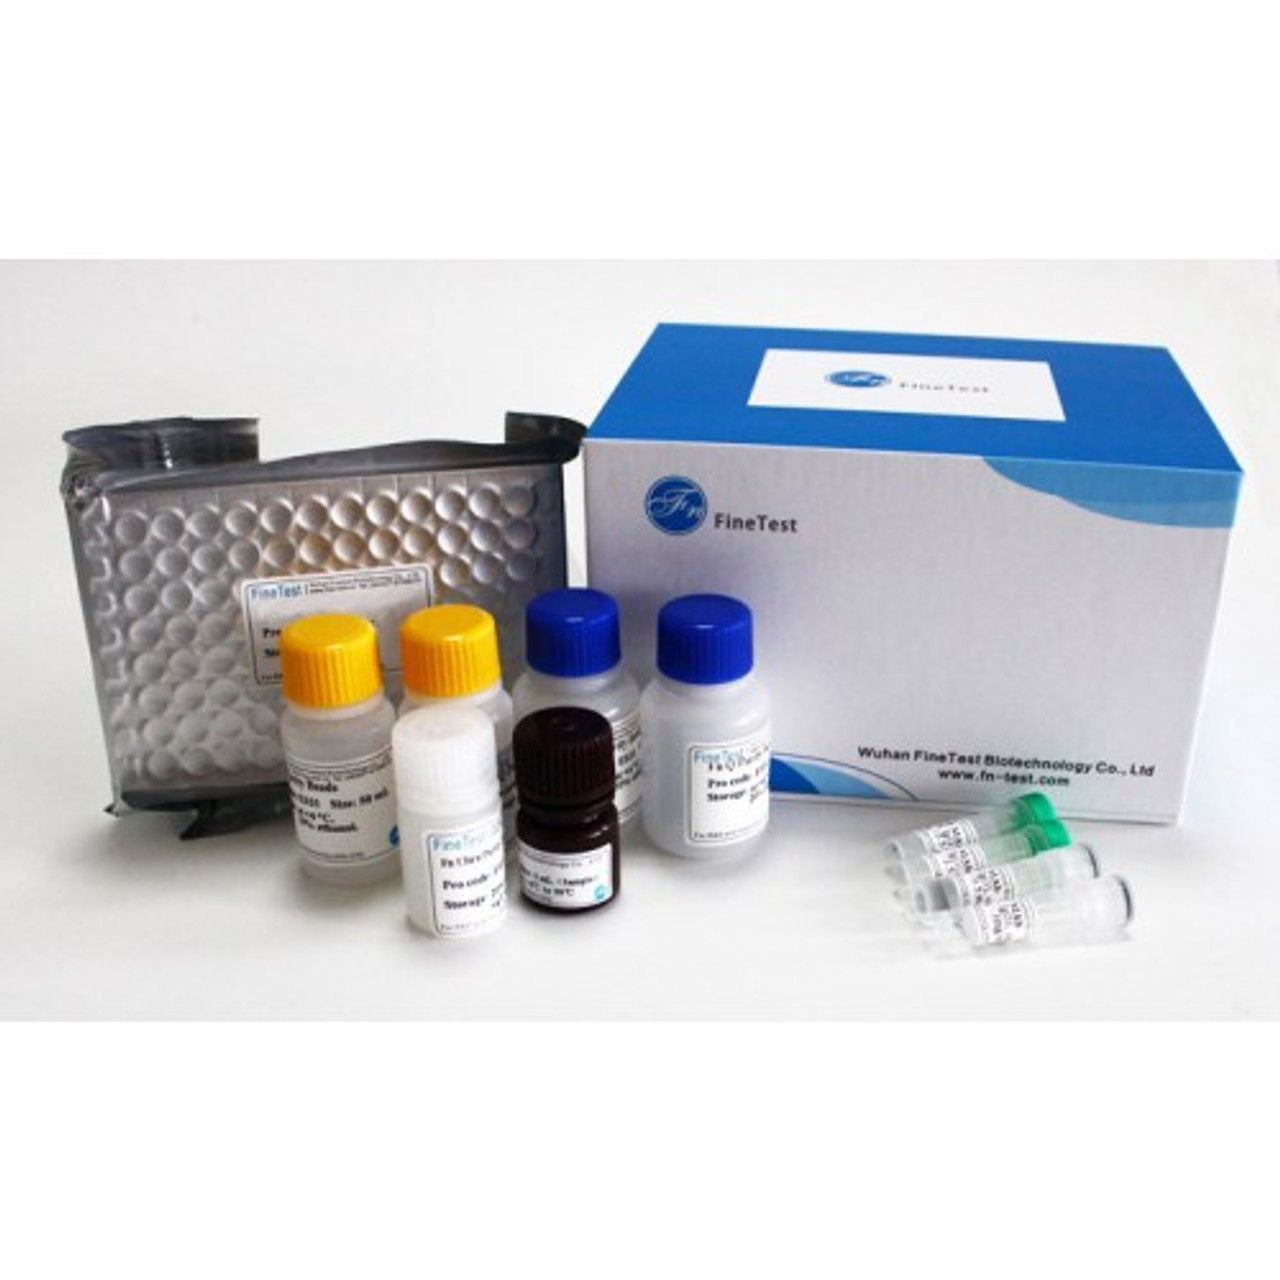 Human MCSFR(Macrophage Colony Stimulating Factor Receptor) ELISA Kit